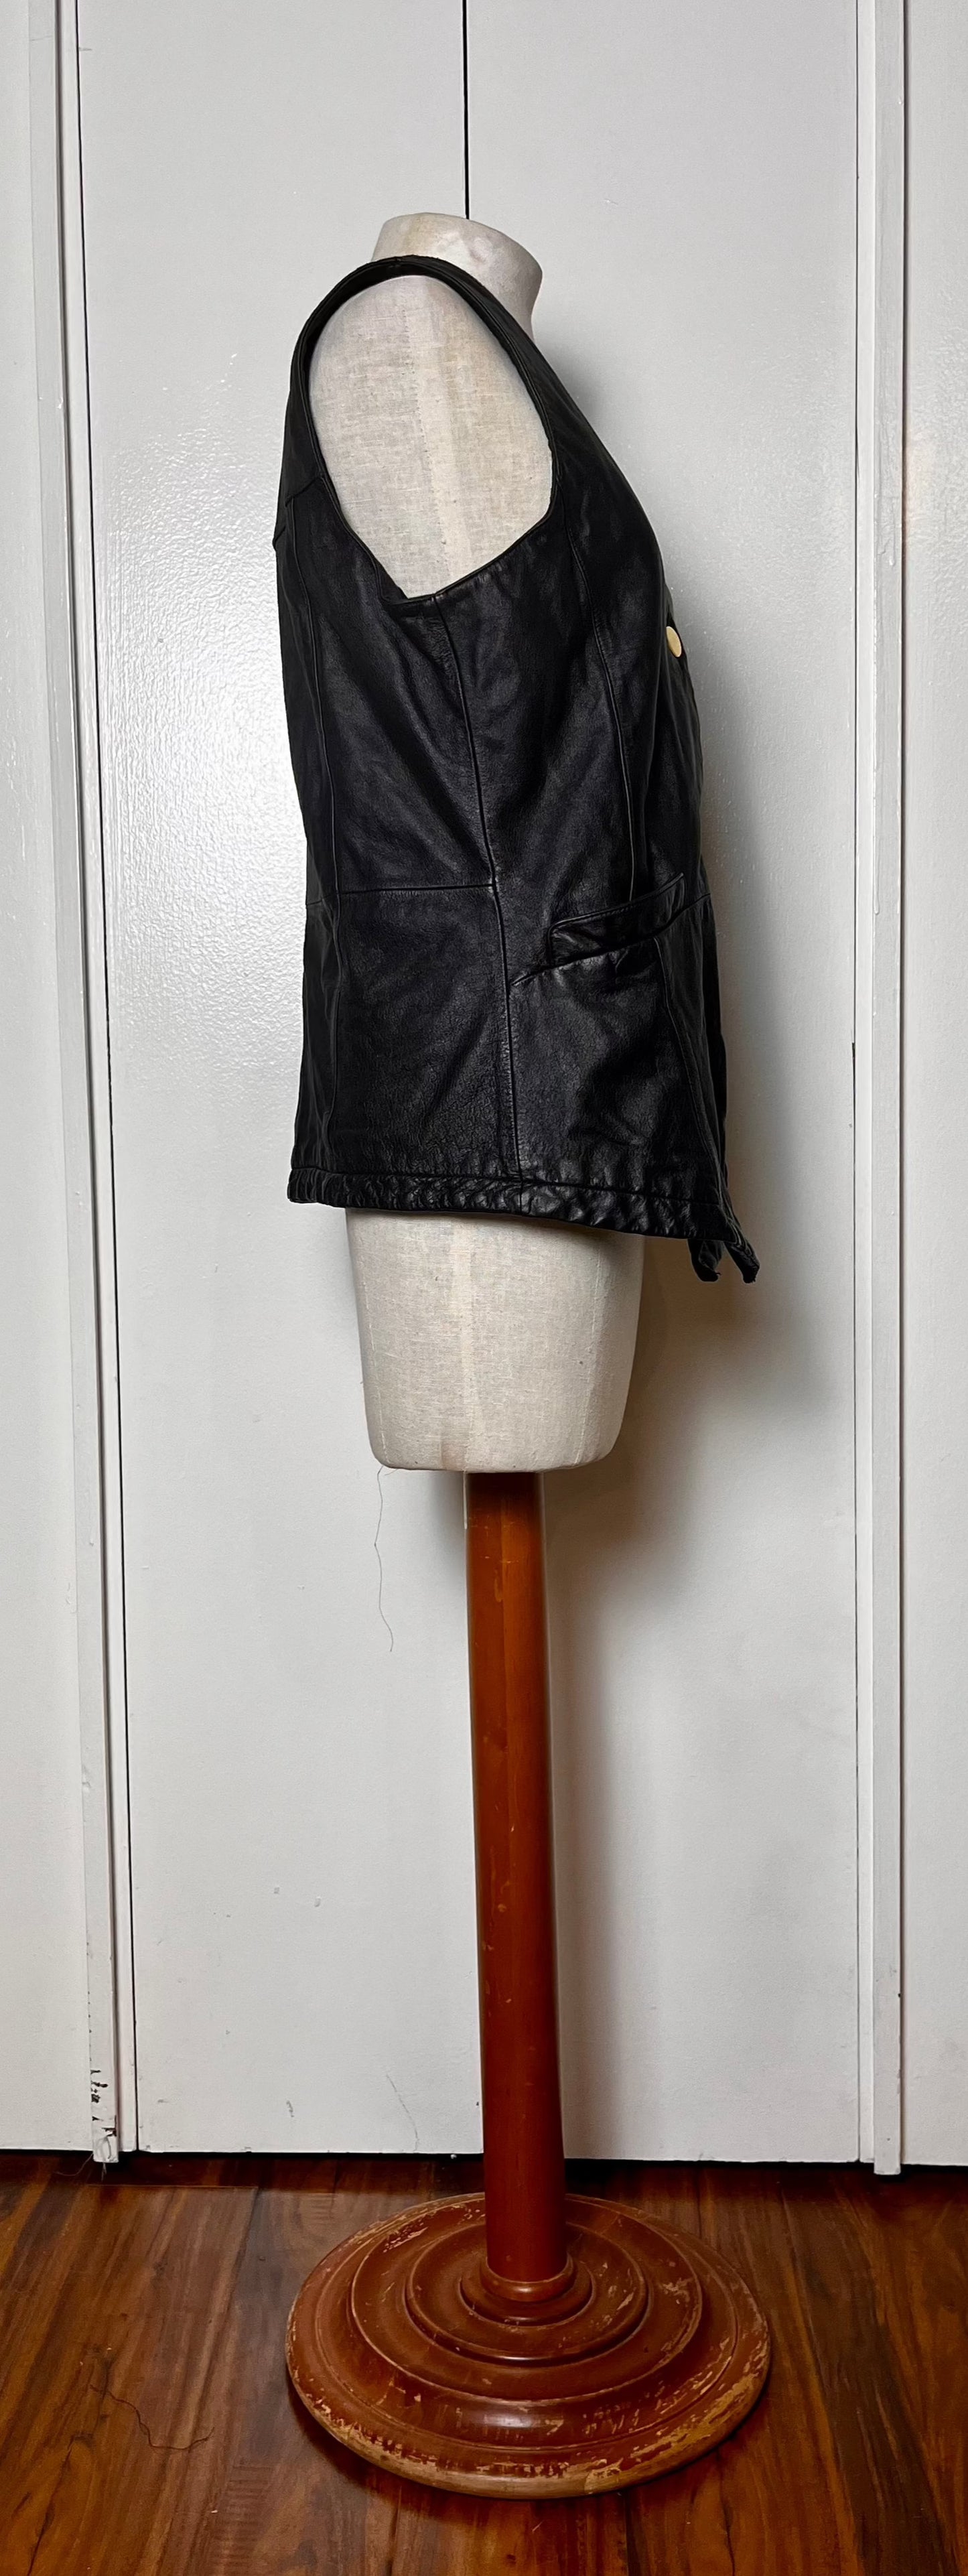 Vintage 1990's "Braefair" Black Leather Vest